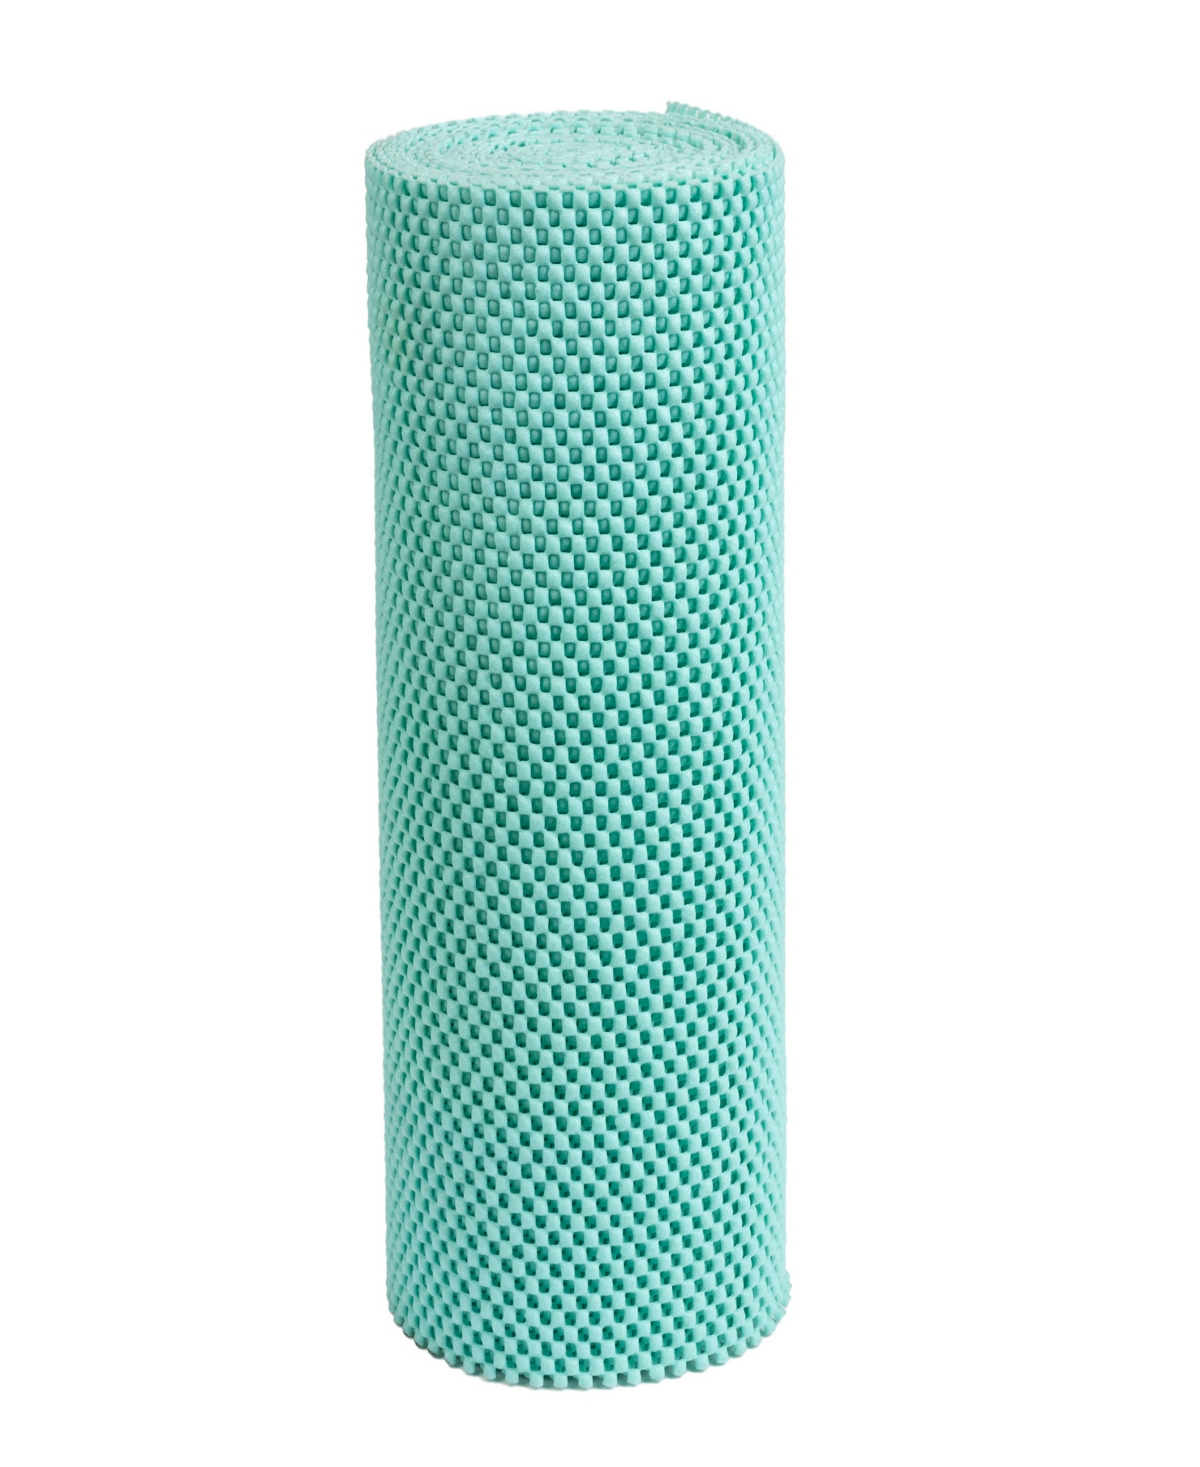 Premium Grip Shelf Liner, 12" x 20' Roll - Mint